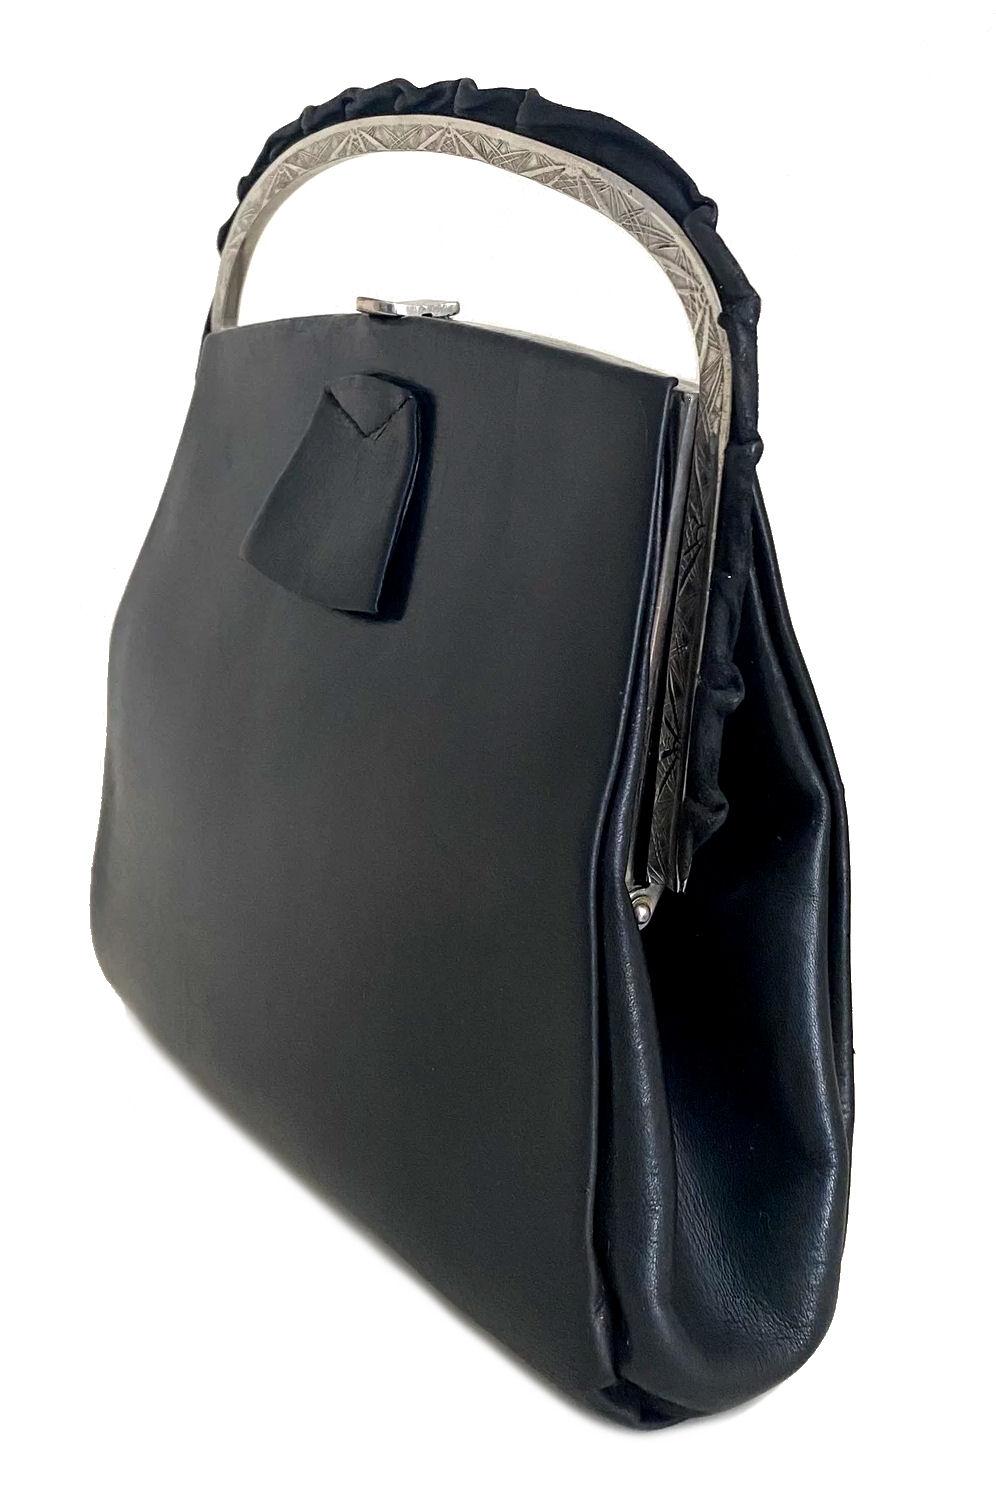 Art Deco Ladies Leather & Chrome handbag, England, c1930 For Sale 2